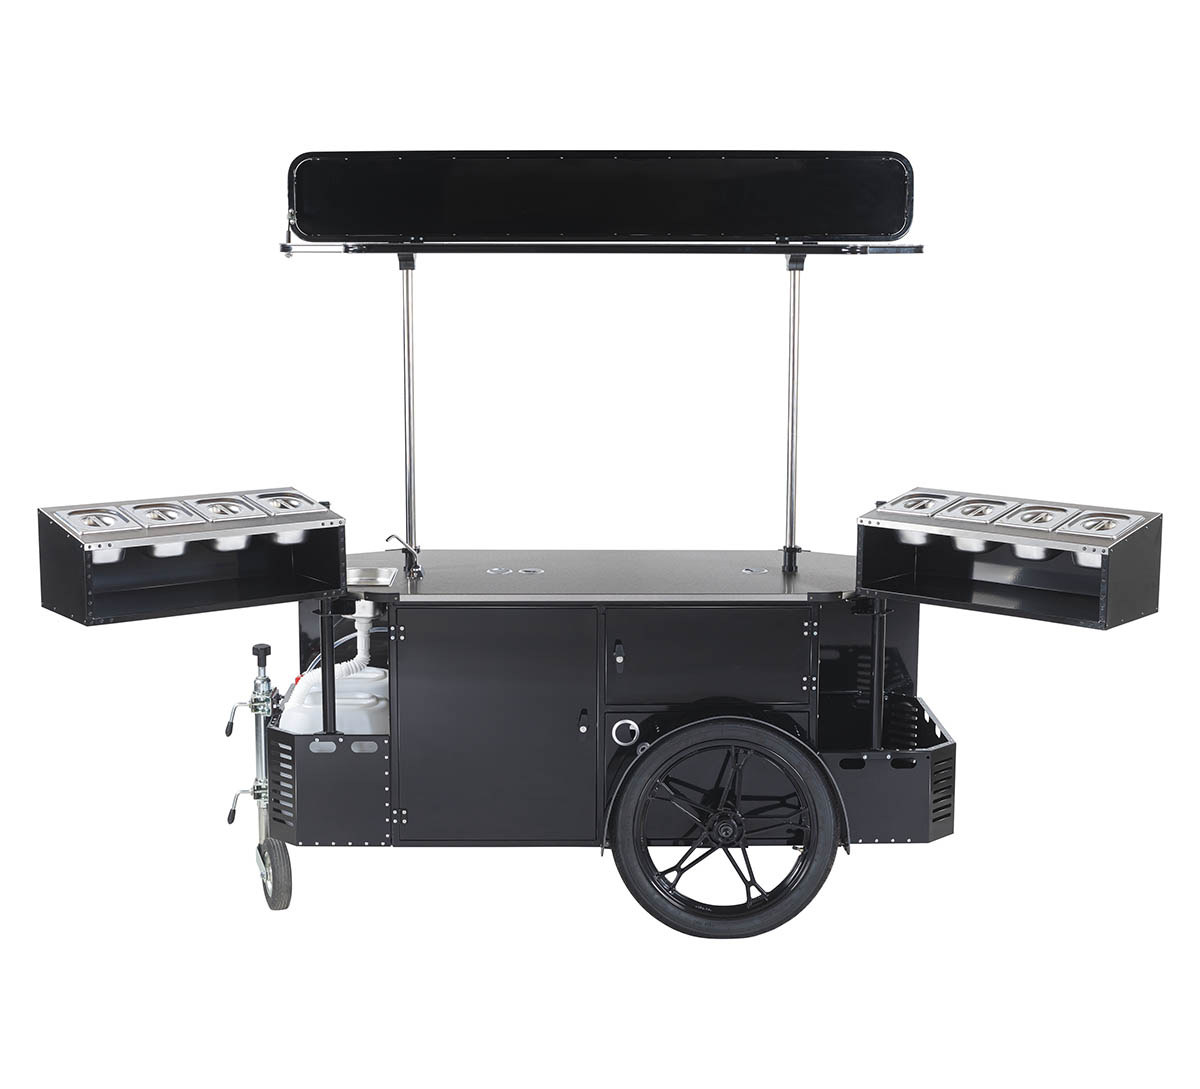 Street food cart on wheels for street food made by BizzOnWheels